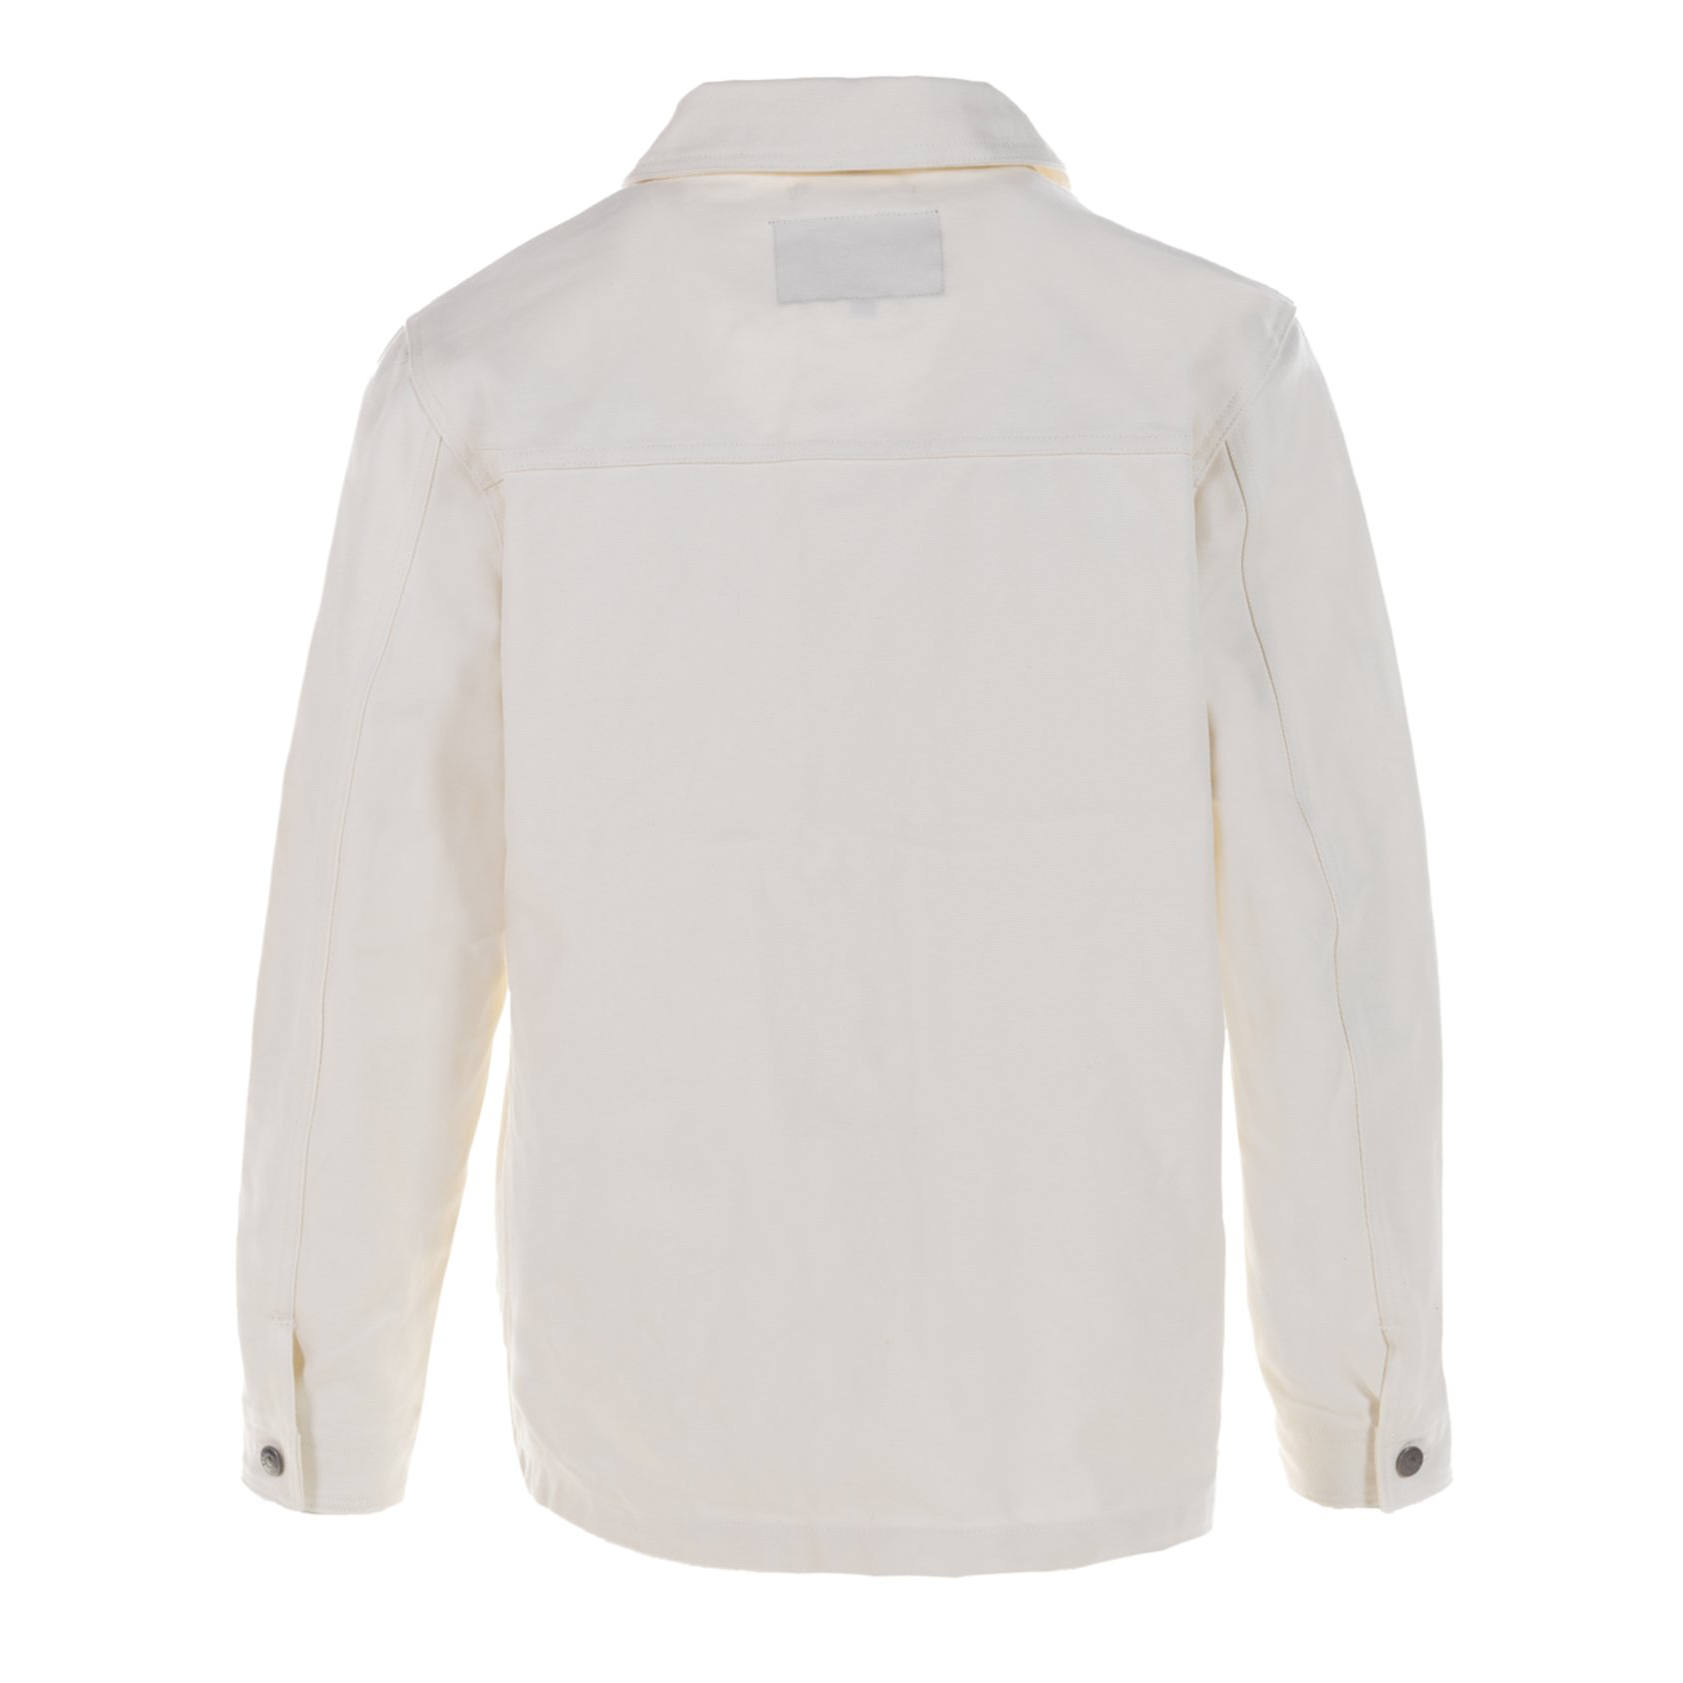 Cotton Canvas Chore Jacket - White